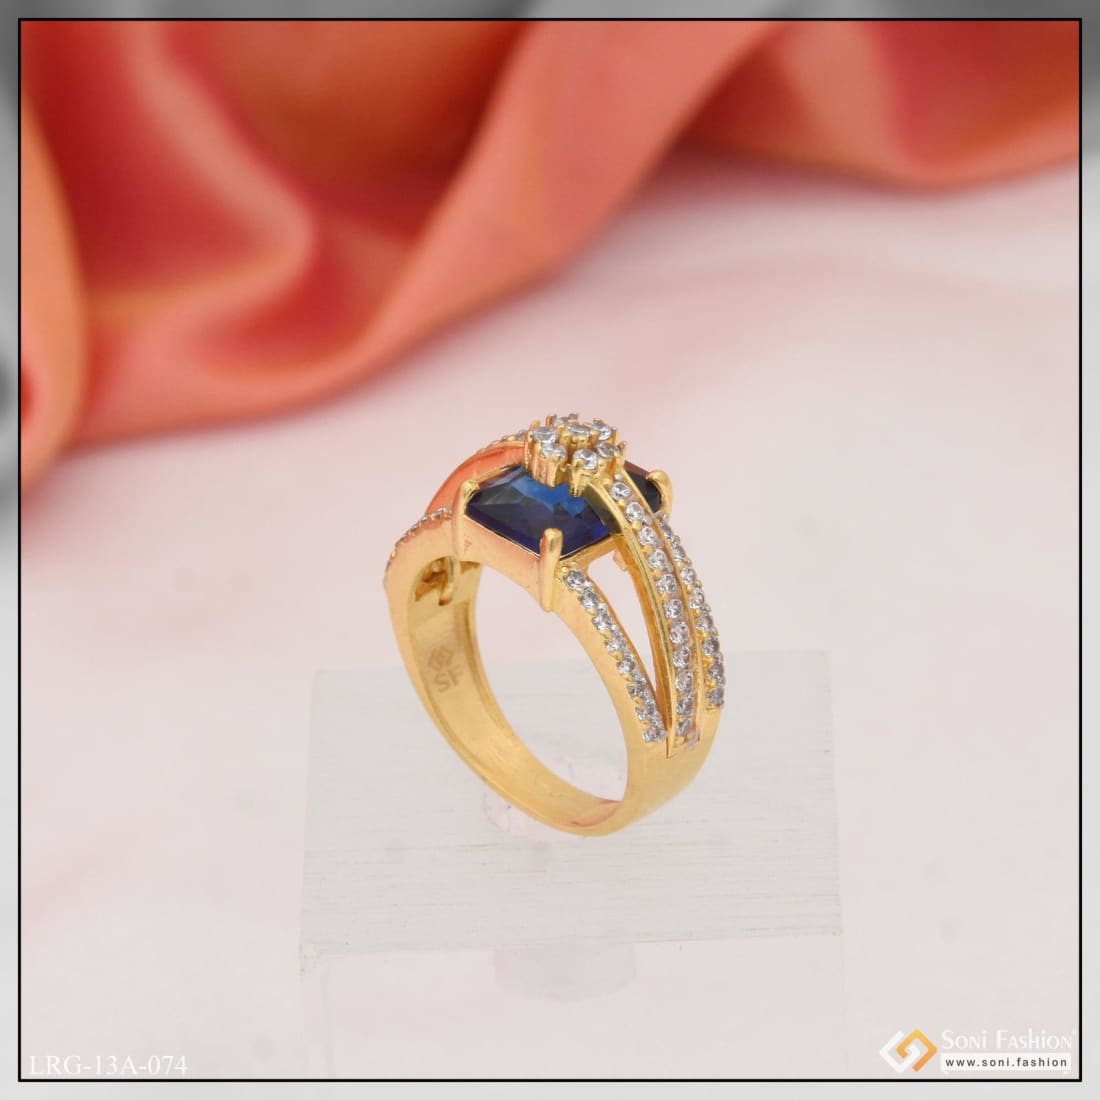 Buy quality 916 plain casting fancy ring in Chennai